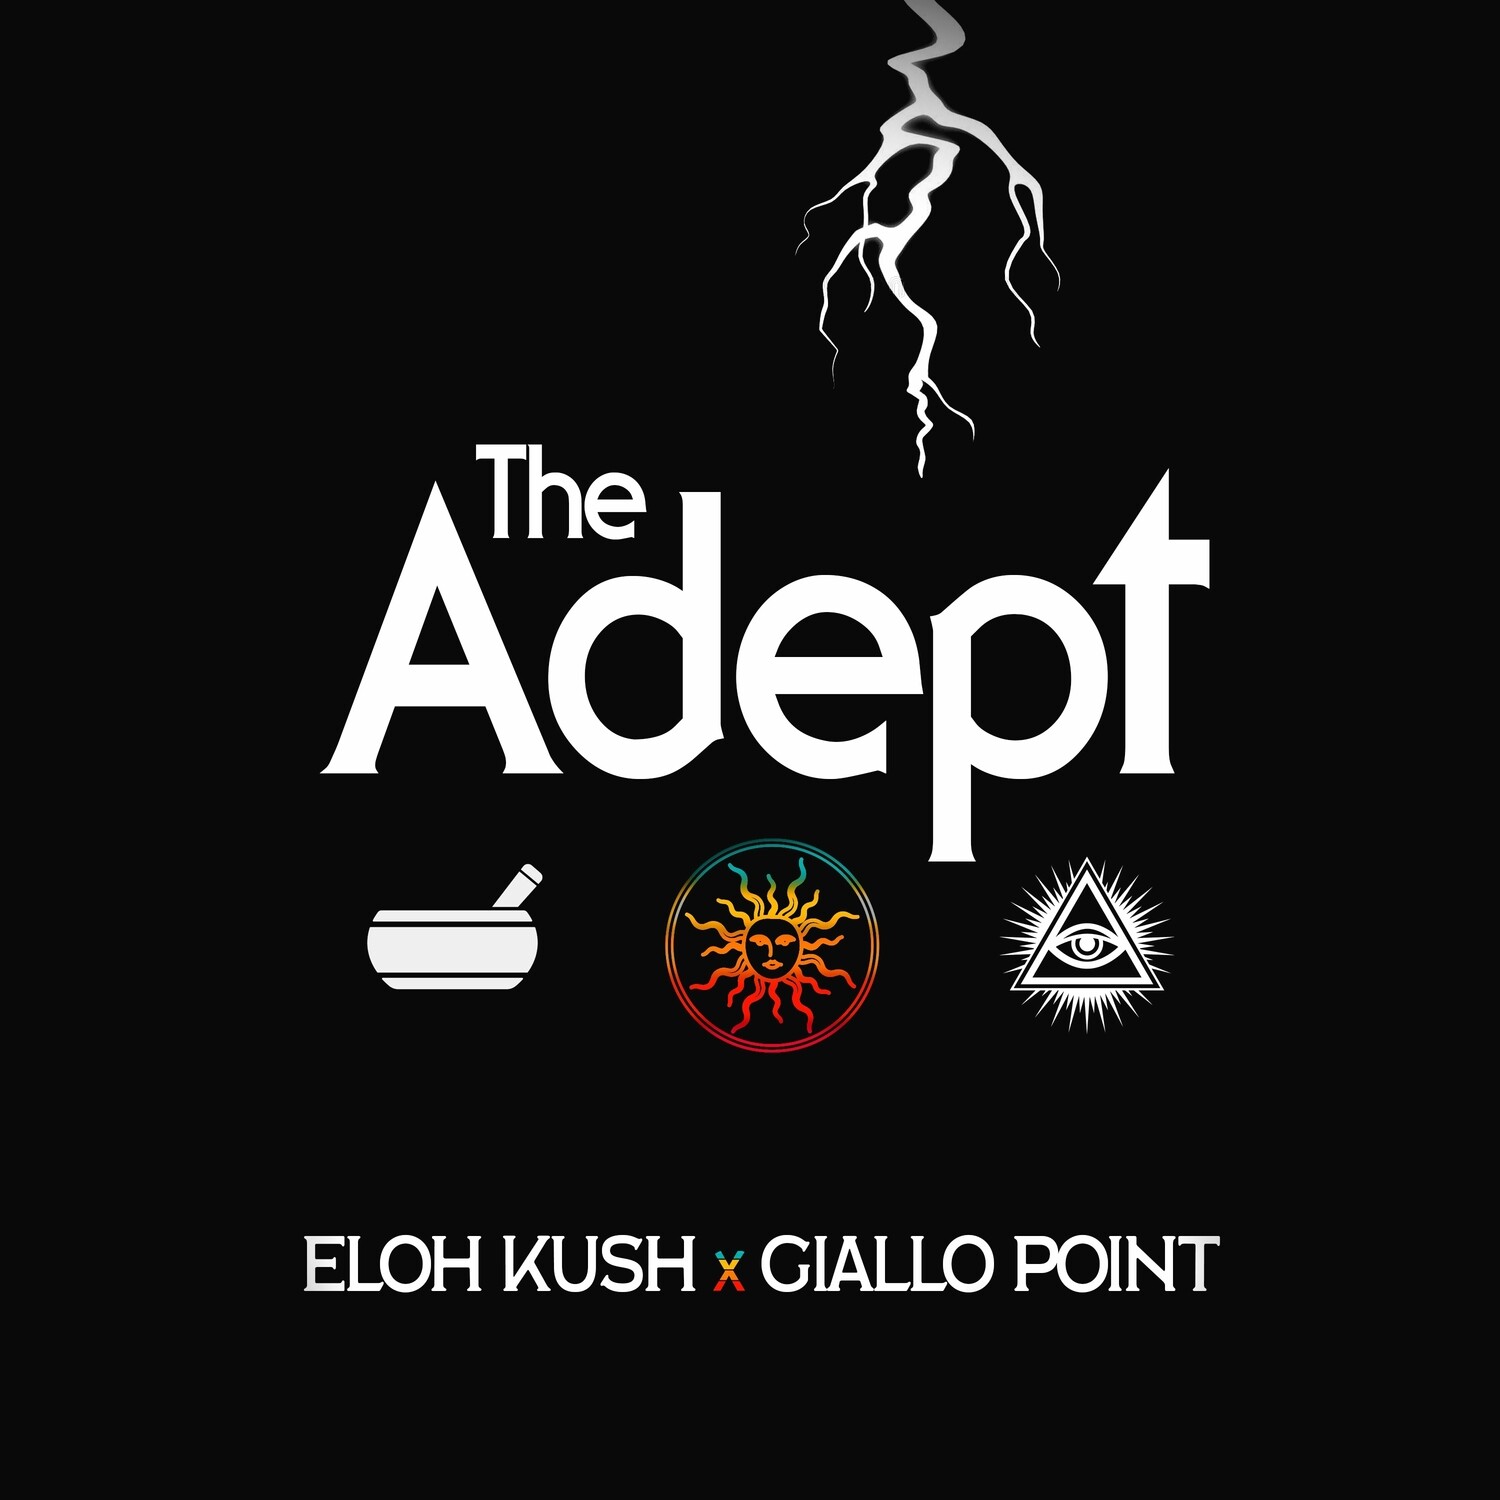 Eloh_kush_x_giallo_point___the_adept